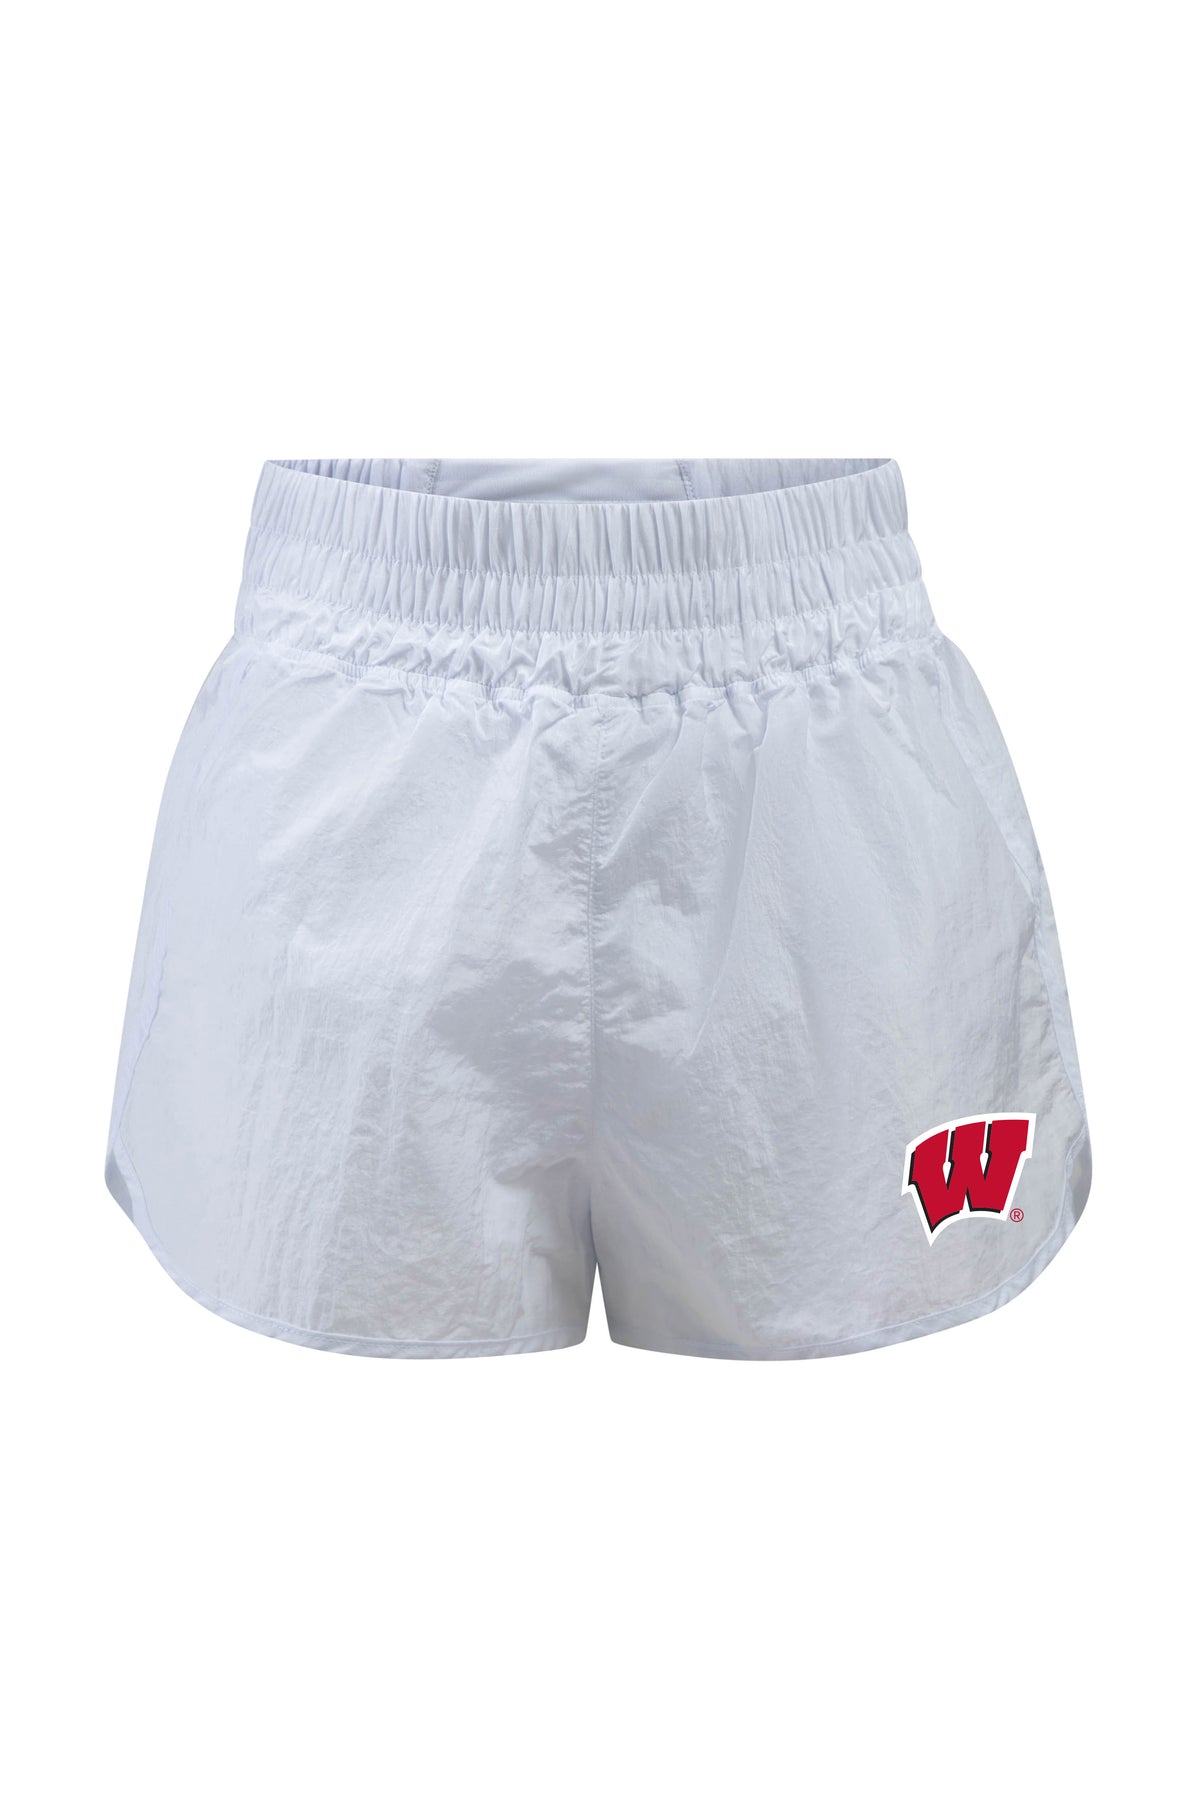 University of Wisconsin Boxer Short